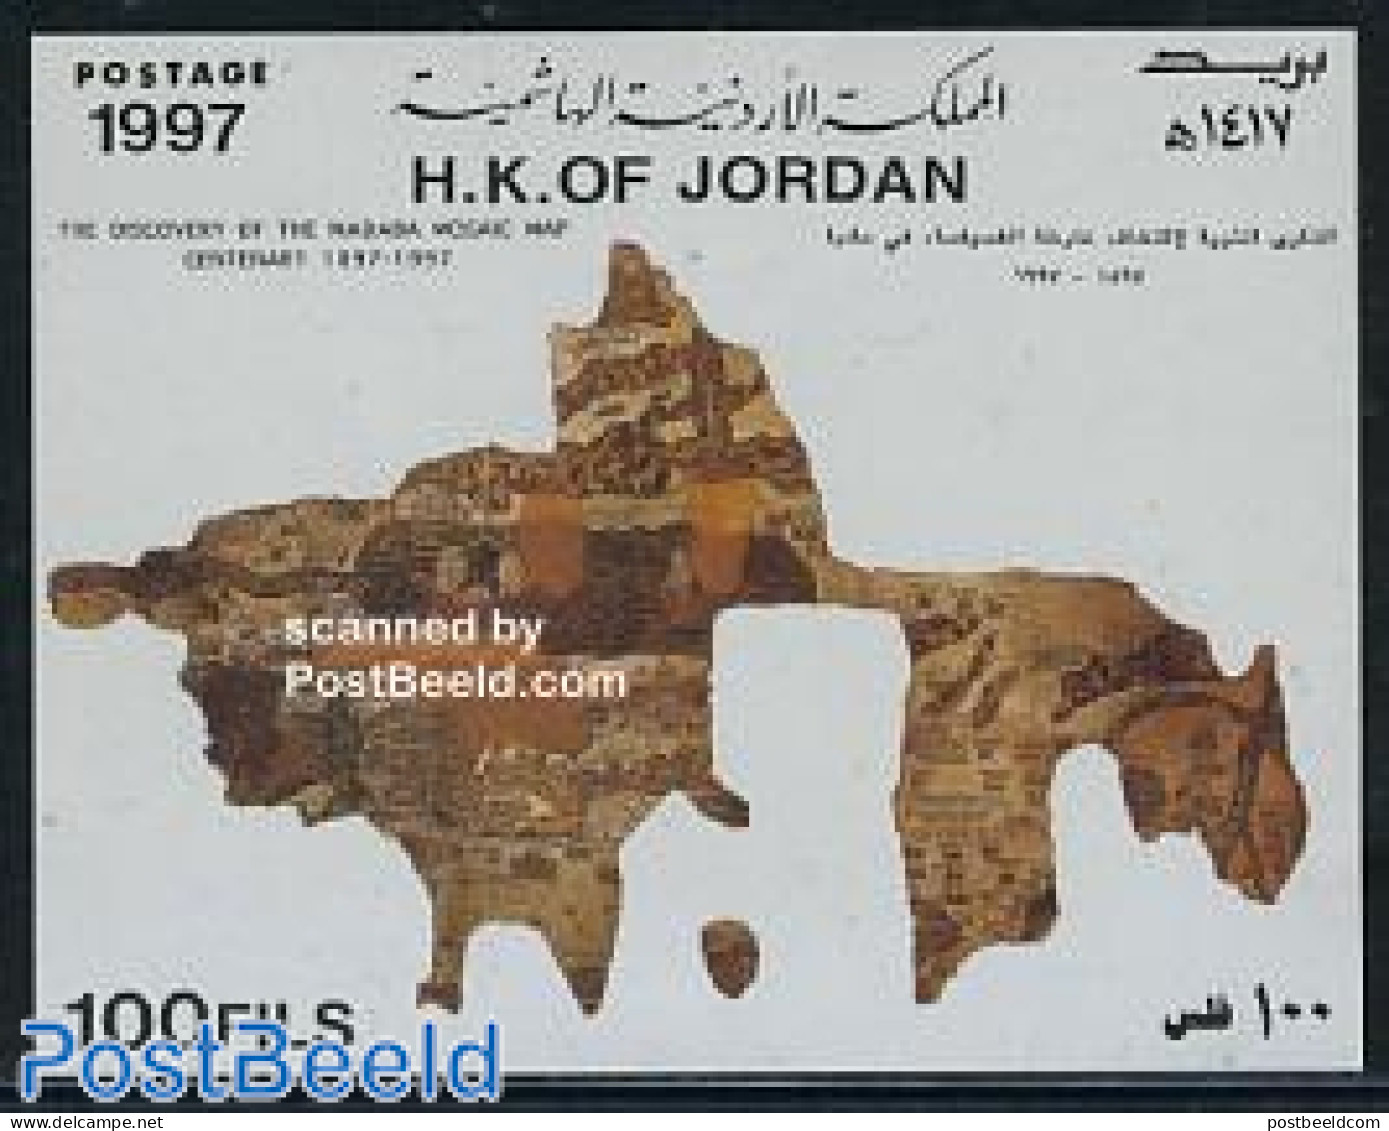 Jordan 1997 Madaba Map S/s, Mint NH, Various - Maps - Geography